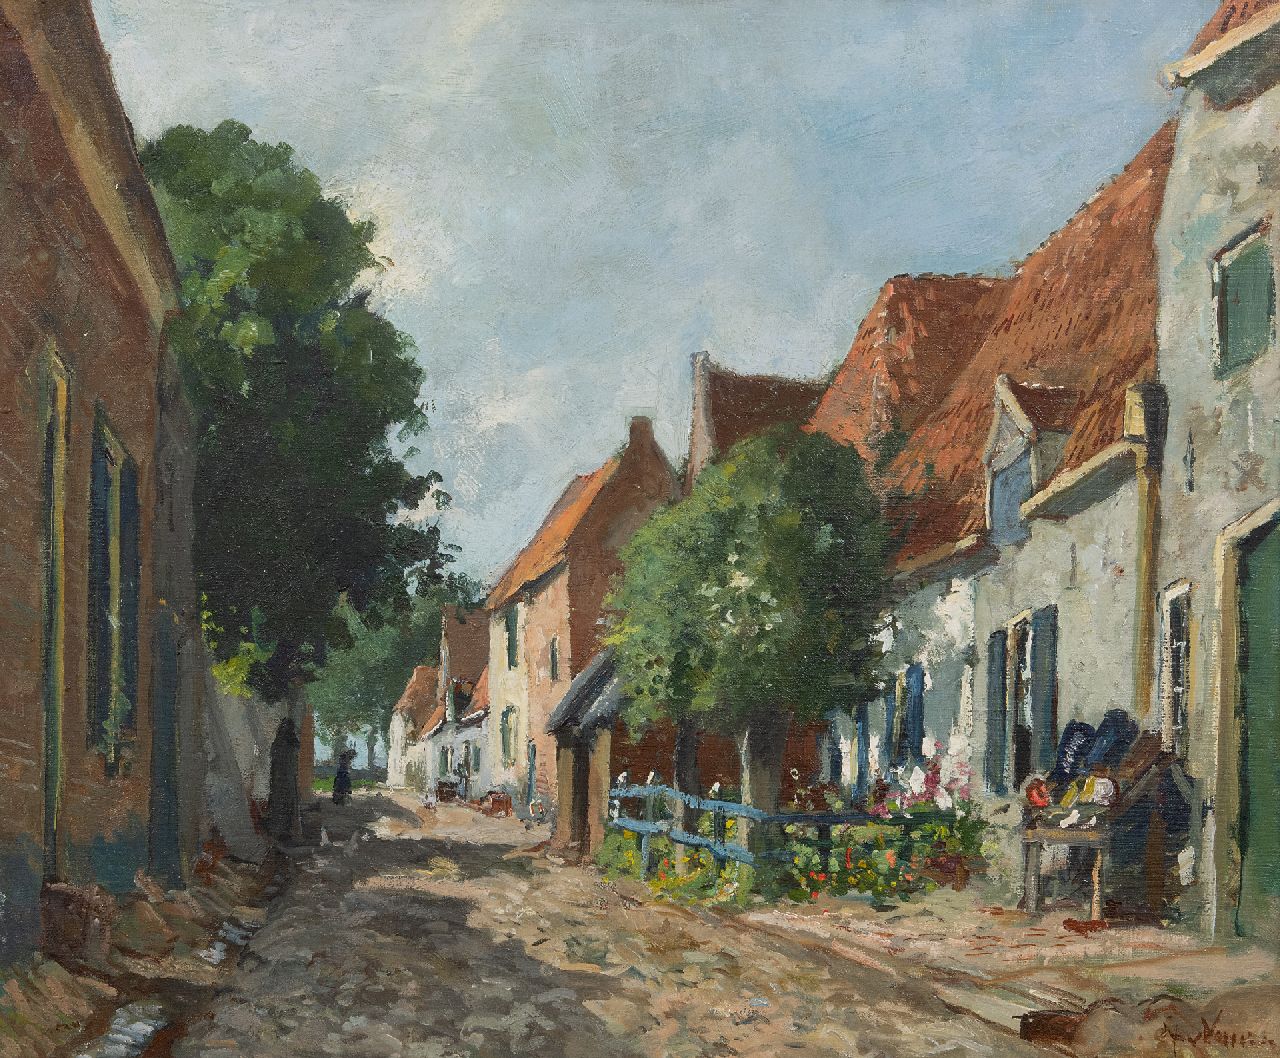 Vuuren J. van | Jan van Vuuren | Paintings offered for sale | A sunny day in Elburg, oil on canvas 50.0 x 60.0 cm, signed l.r.